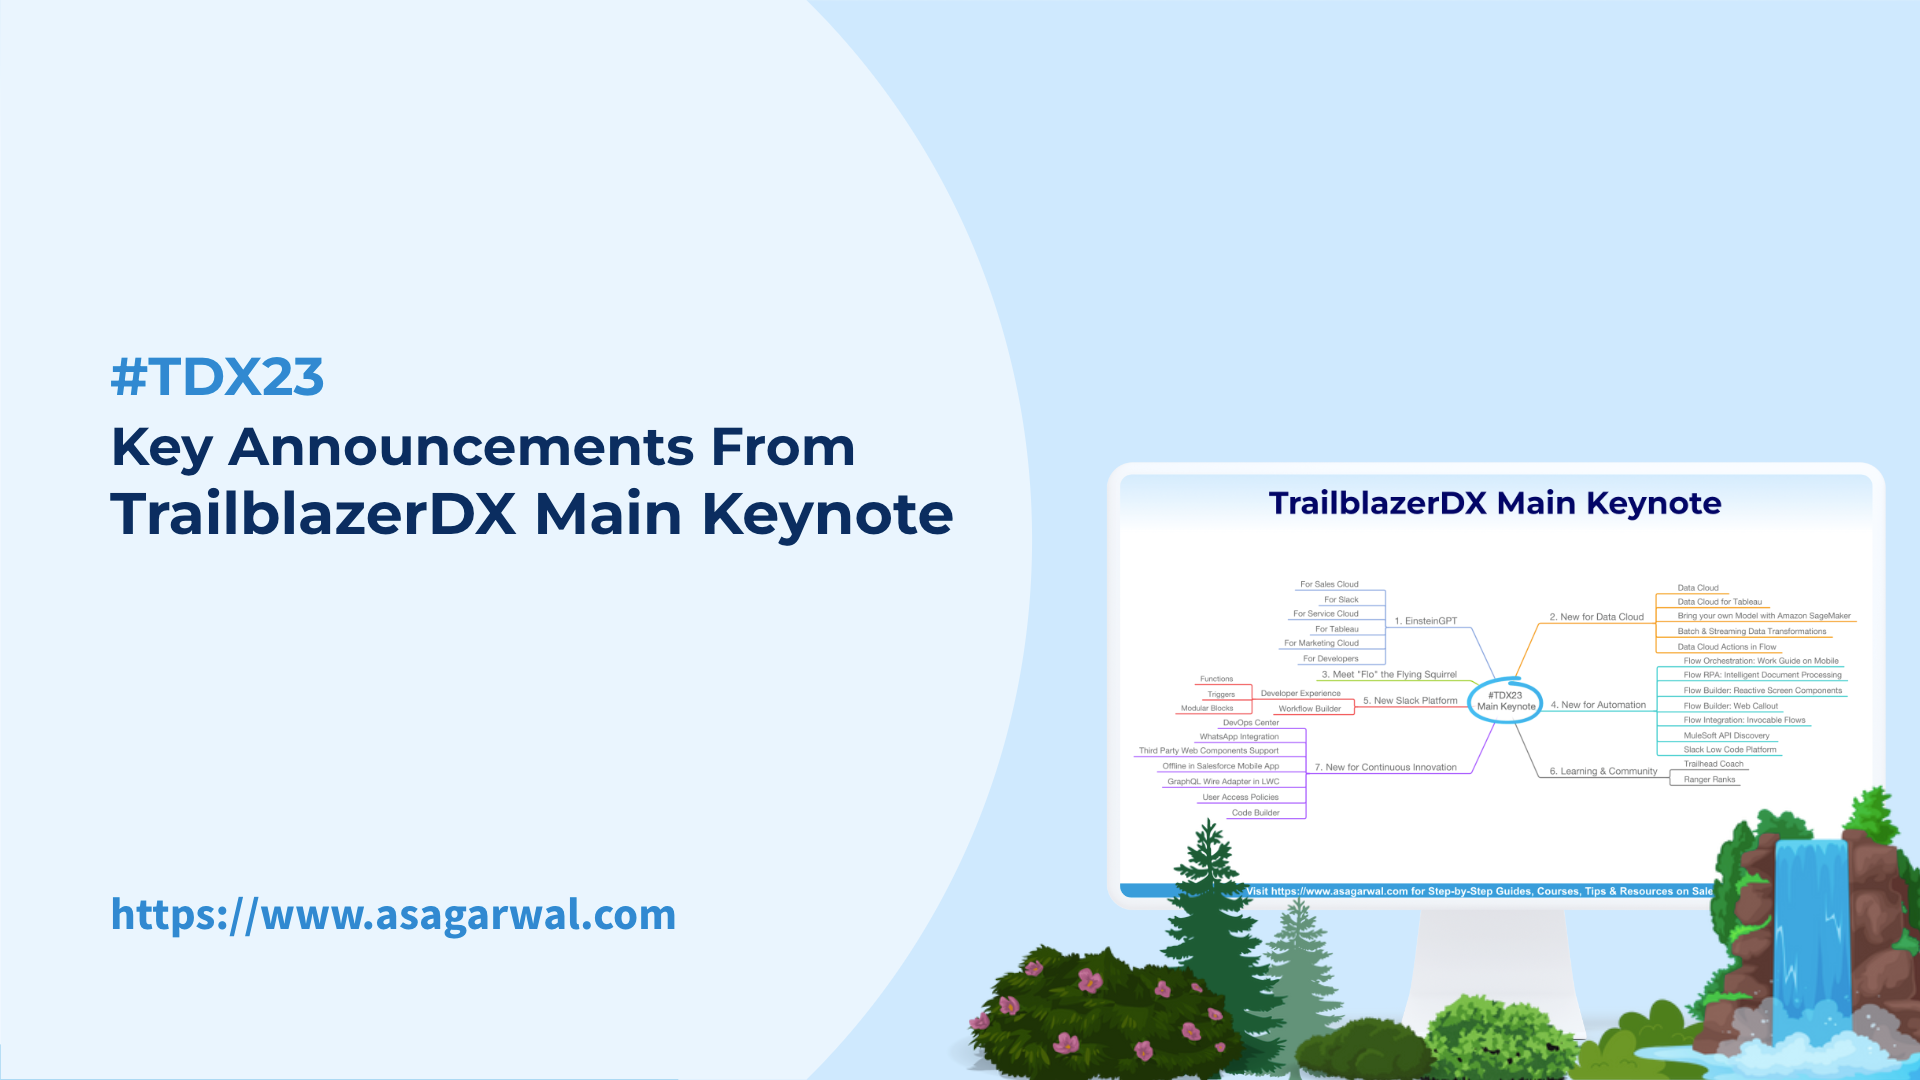 #TDX23 - Key Announcements From TrailblazerDX Main Keynote